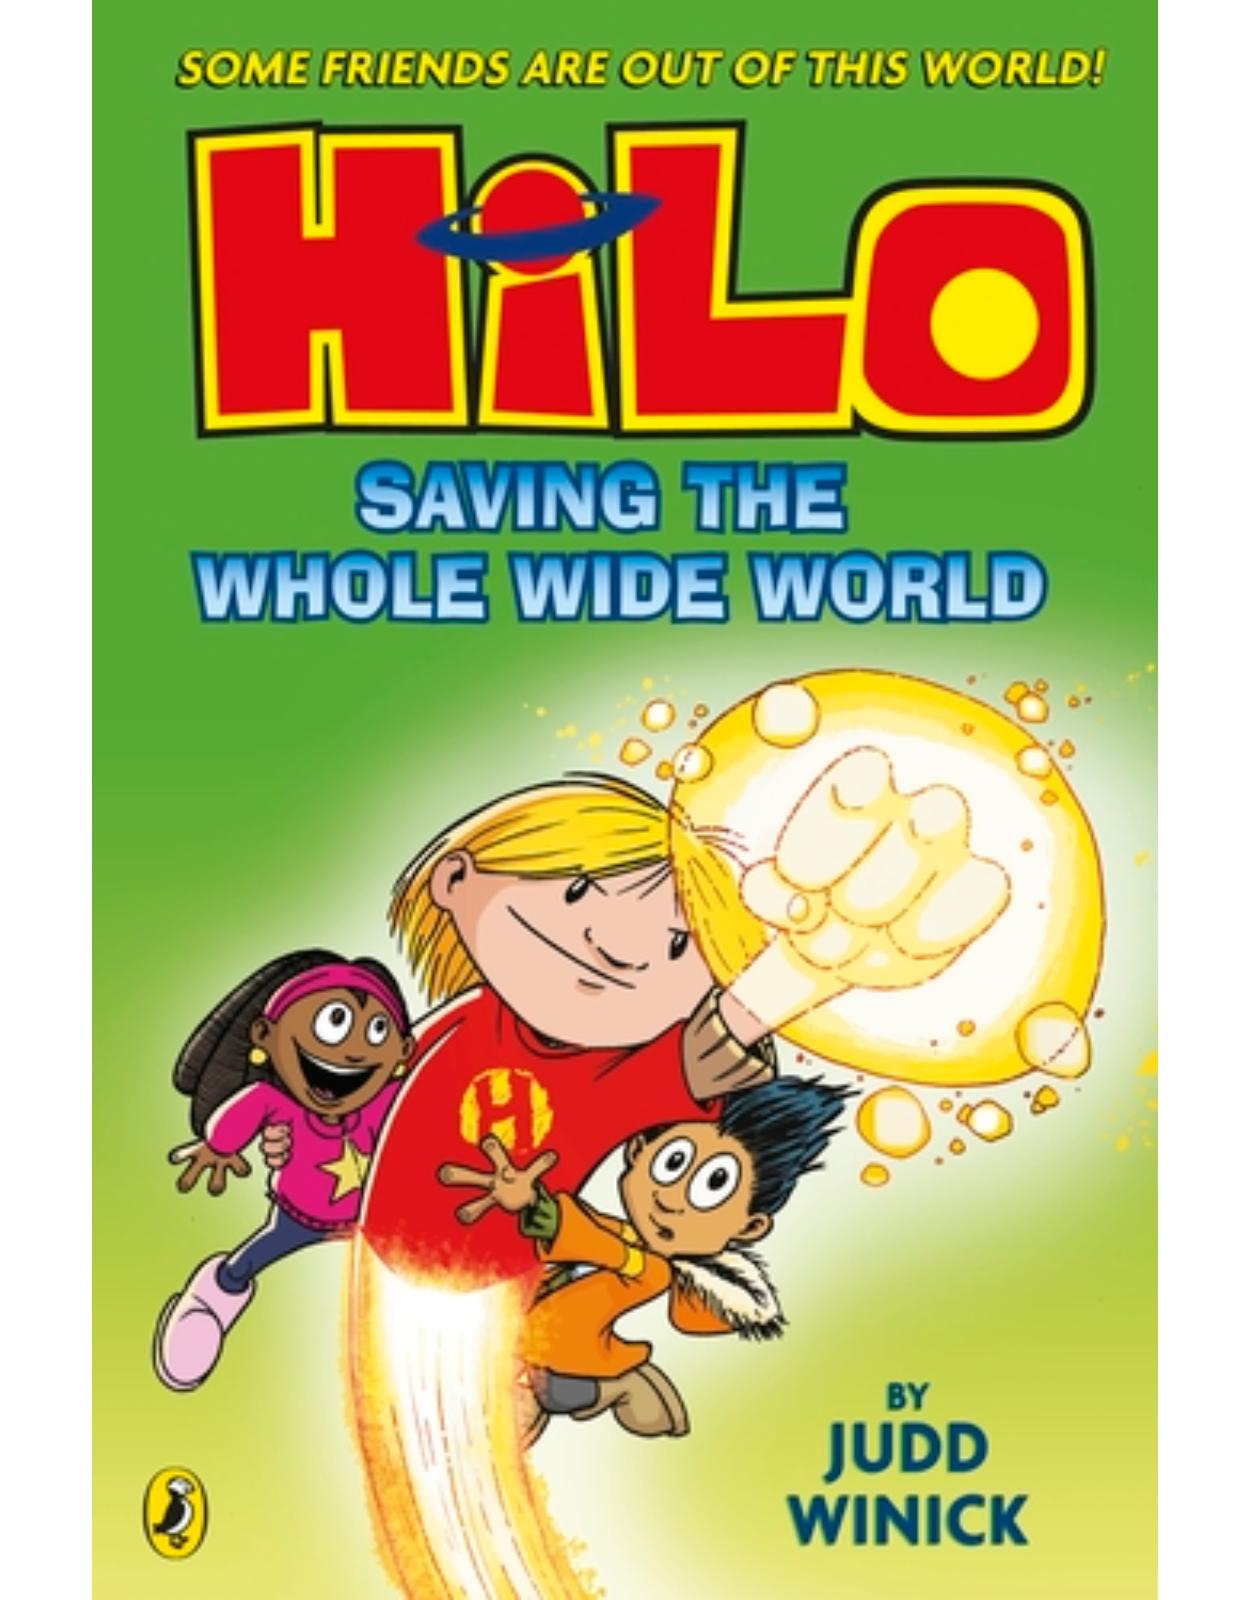 Hilo Book 2: Saving the Whole Wide World